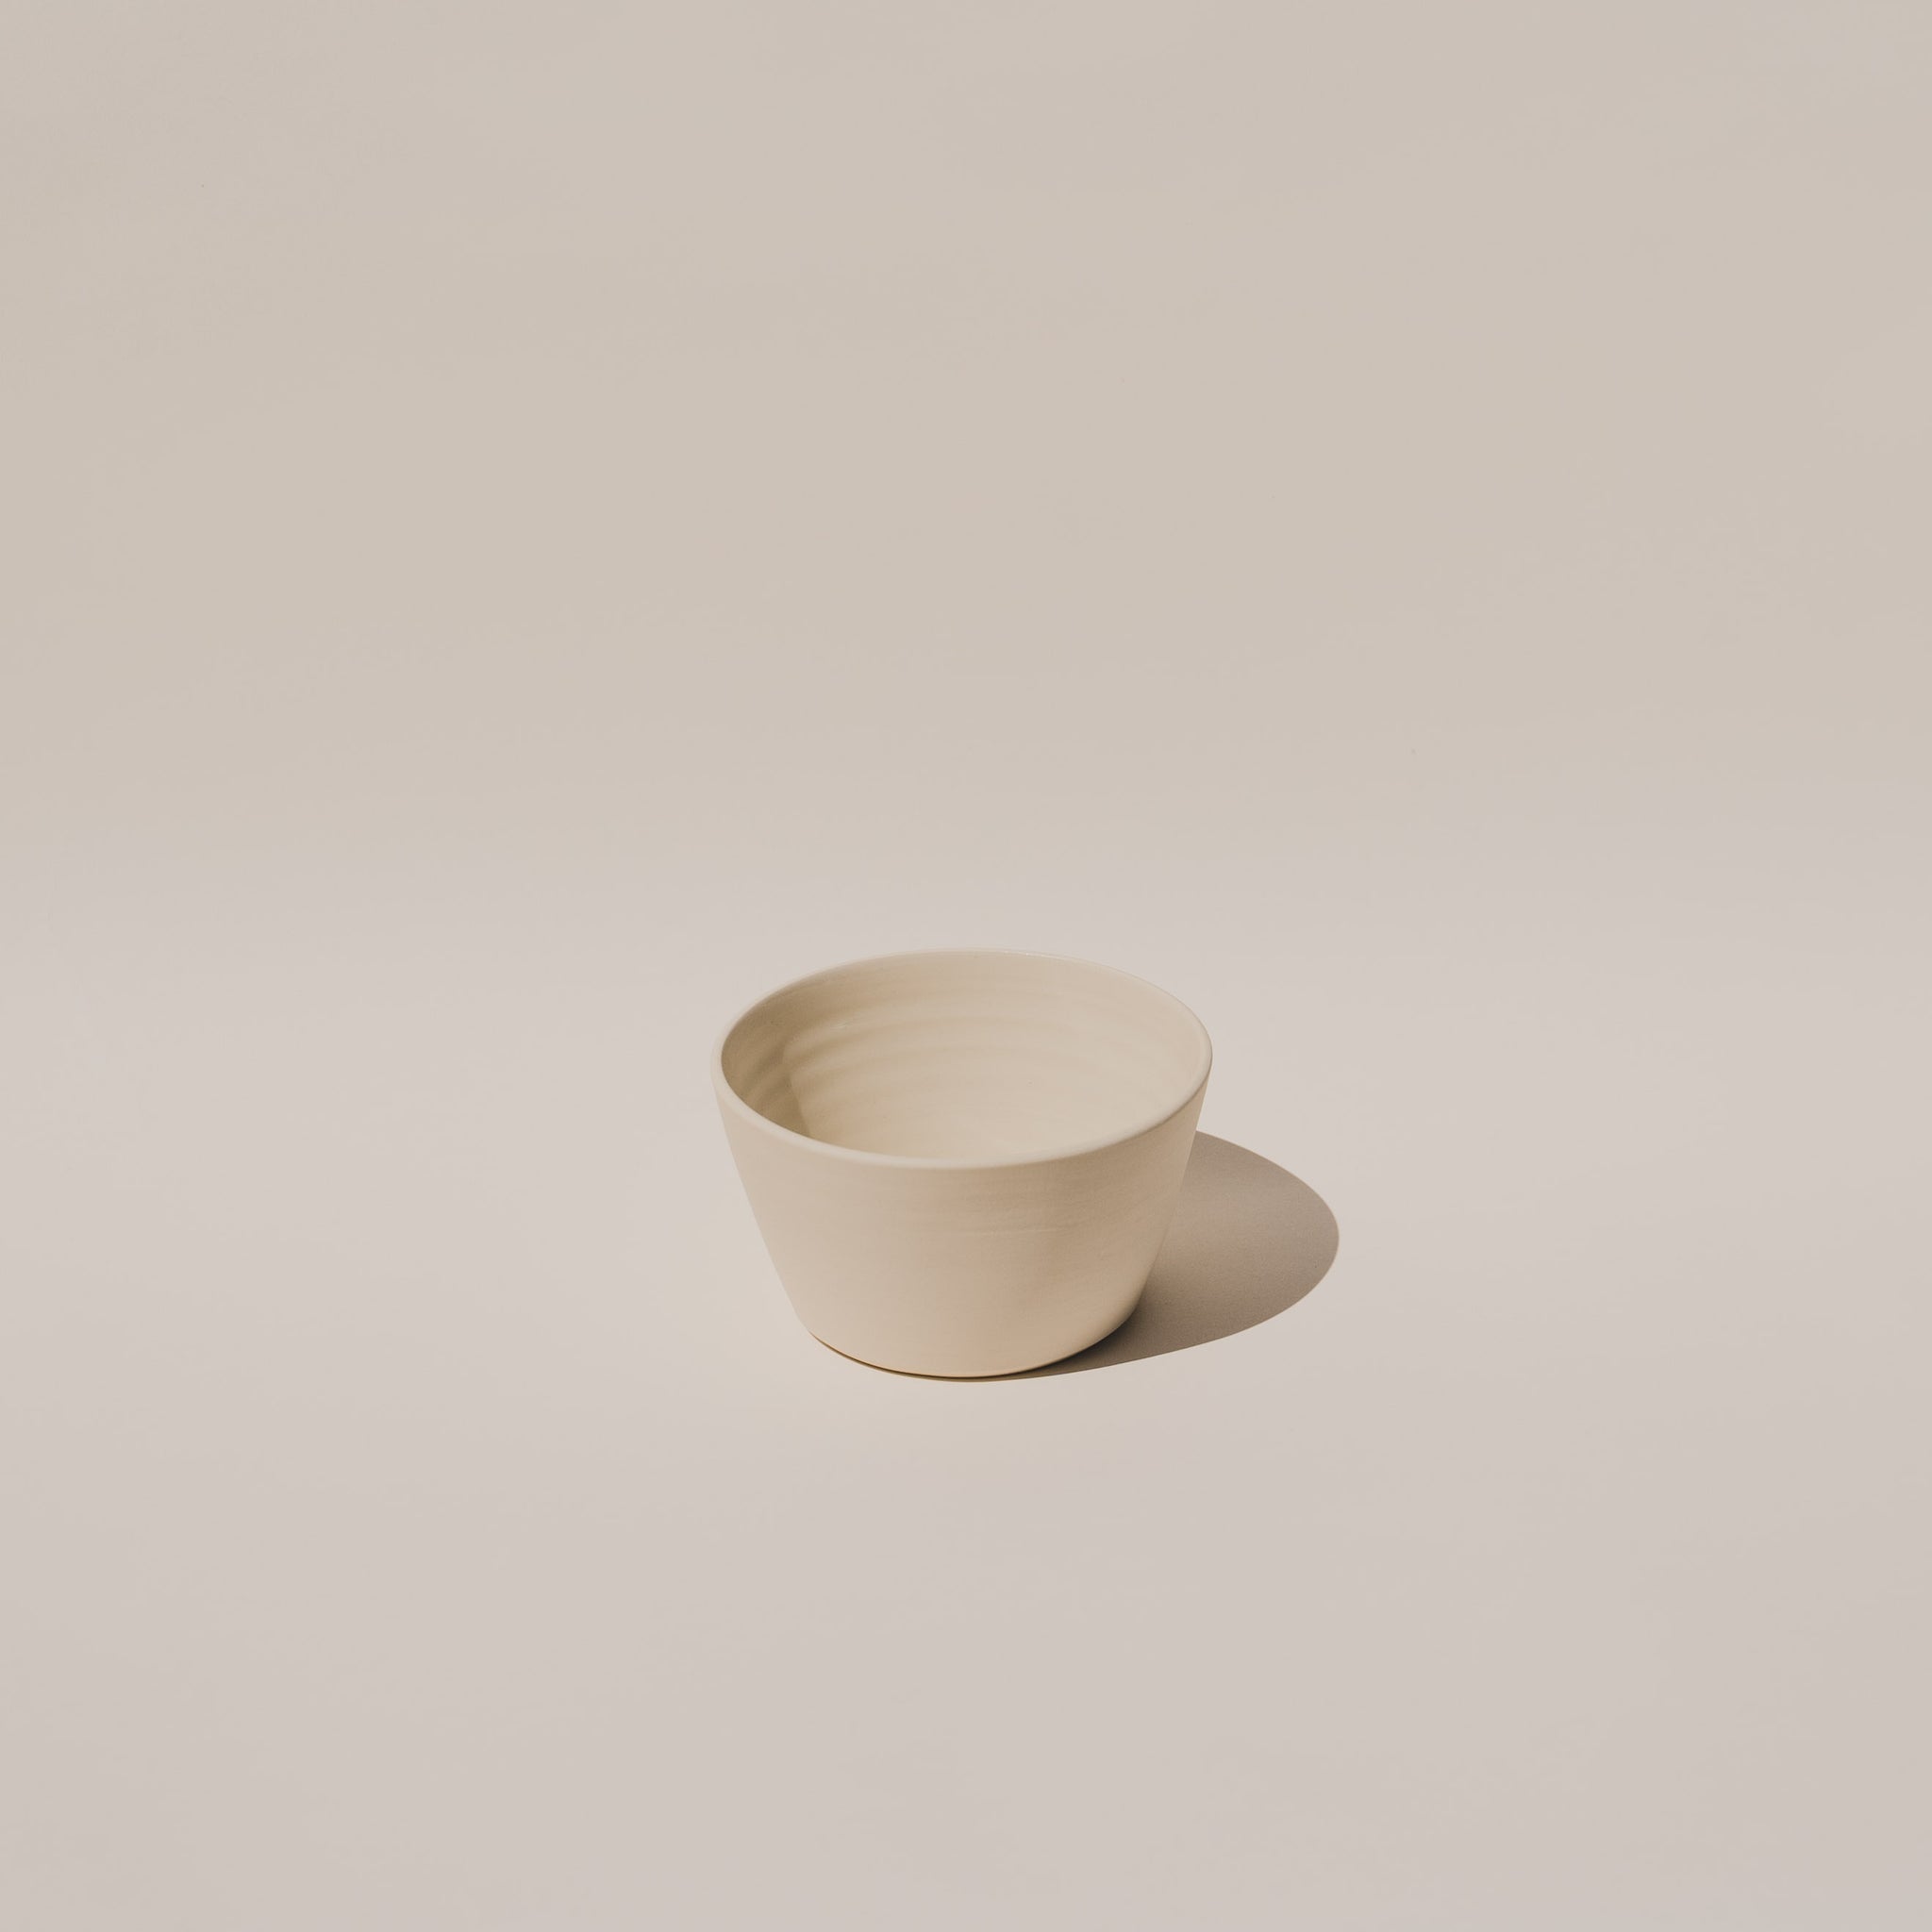 White Ceramic Bowl